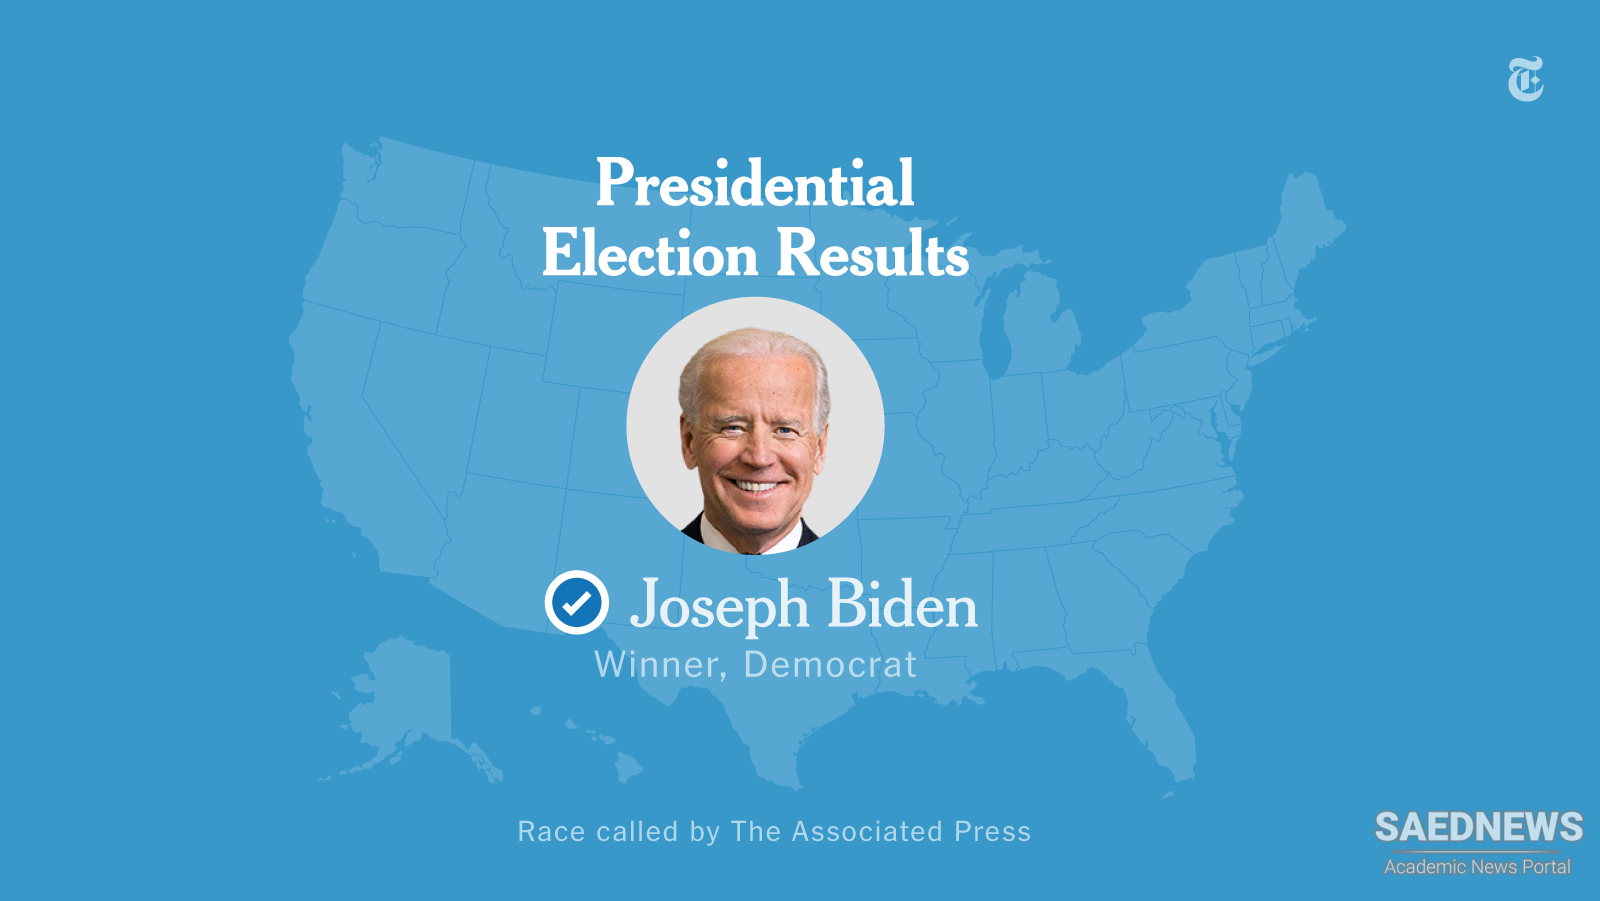 Joe Biden Won the 2020 US Presidential Election